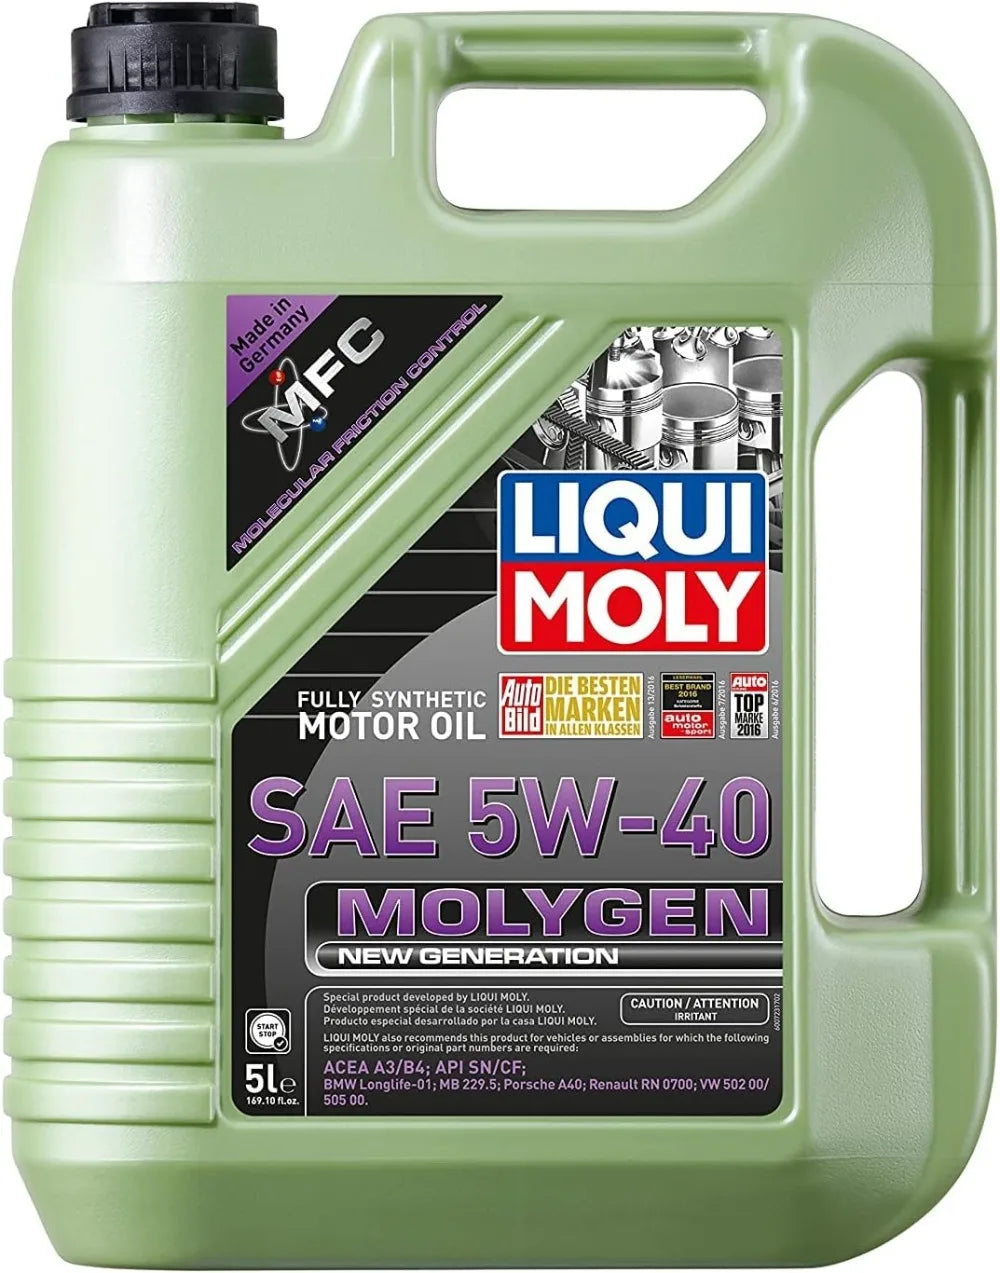 LIQUI MOLY Molygen New Generation SAE 5W-40 | 5 L | Motor oil | SKU: 20232